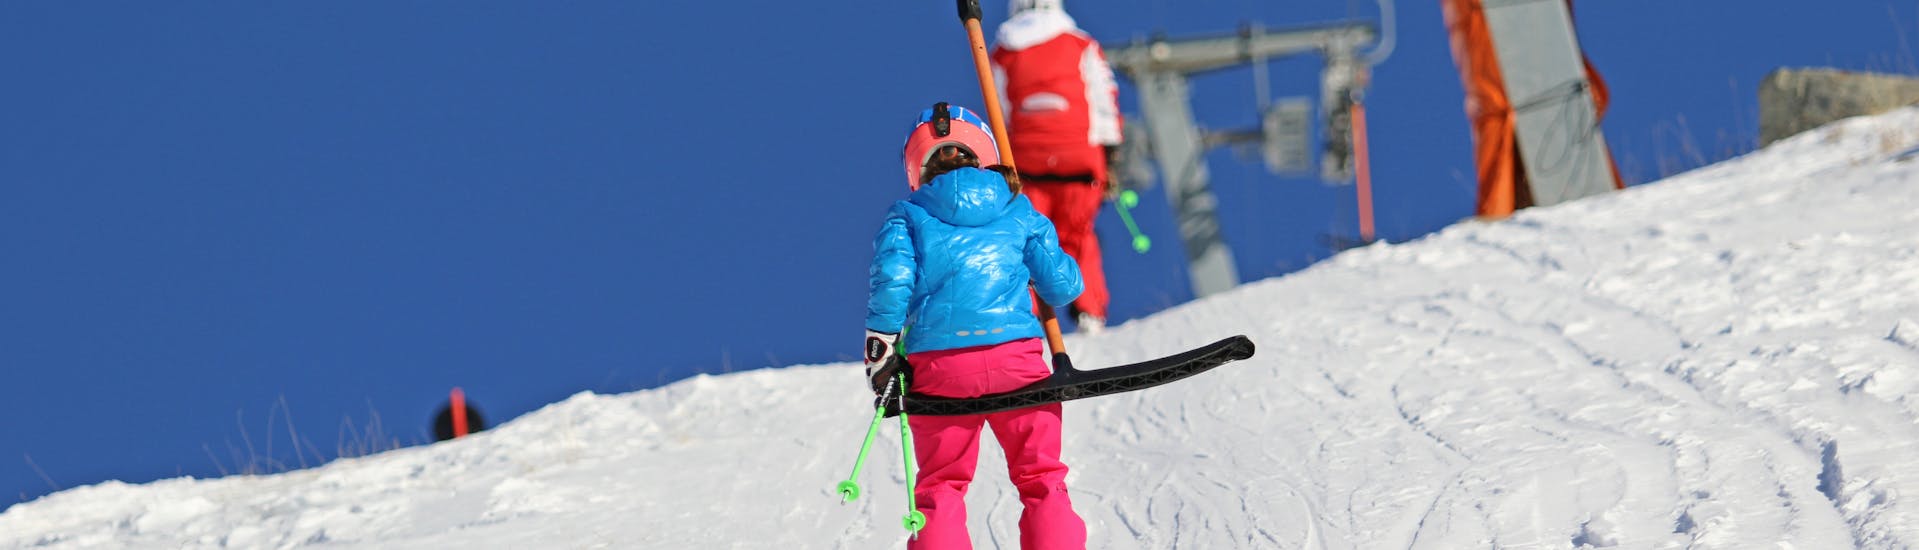 Private Ski Lessons for Kids in Samnaun/Ischgl.